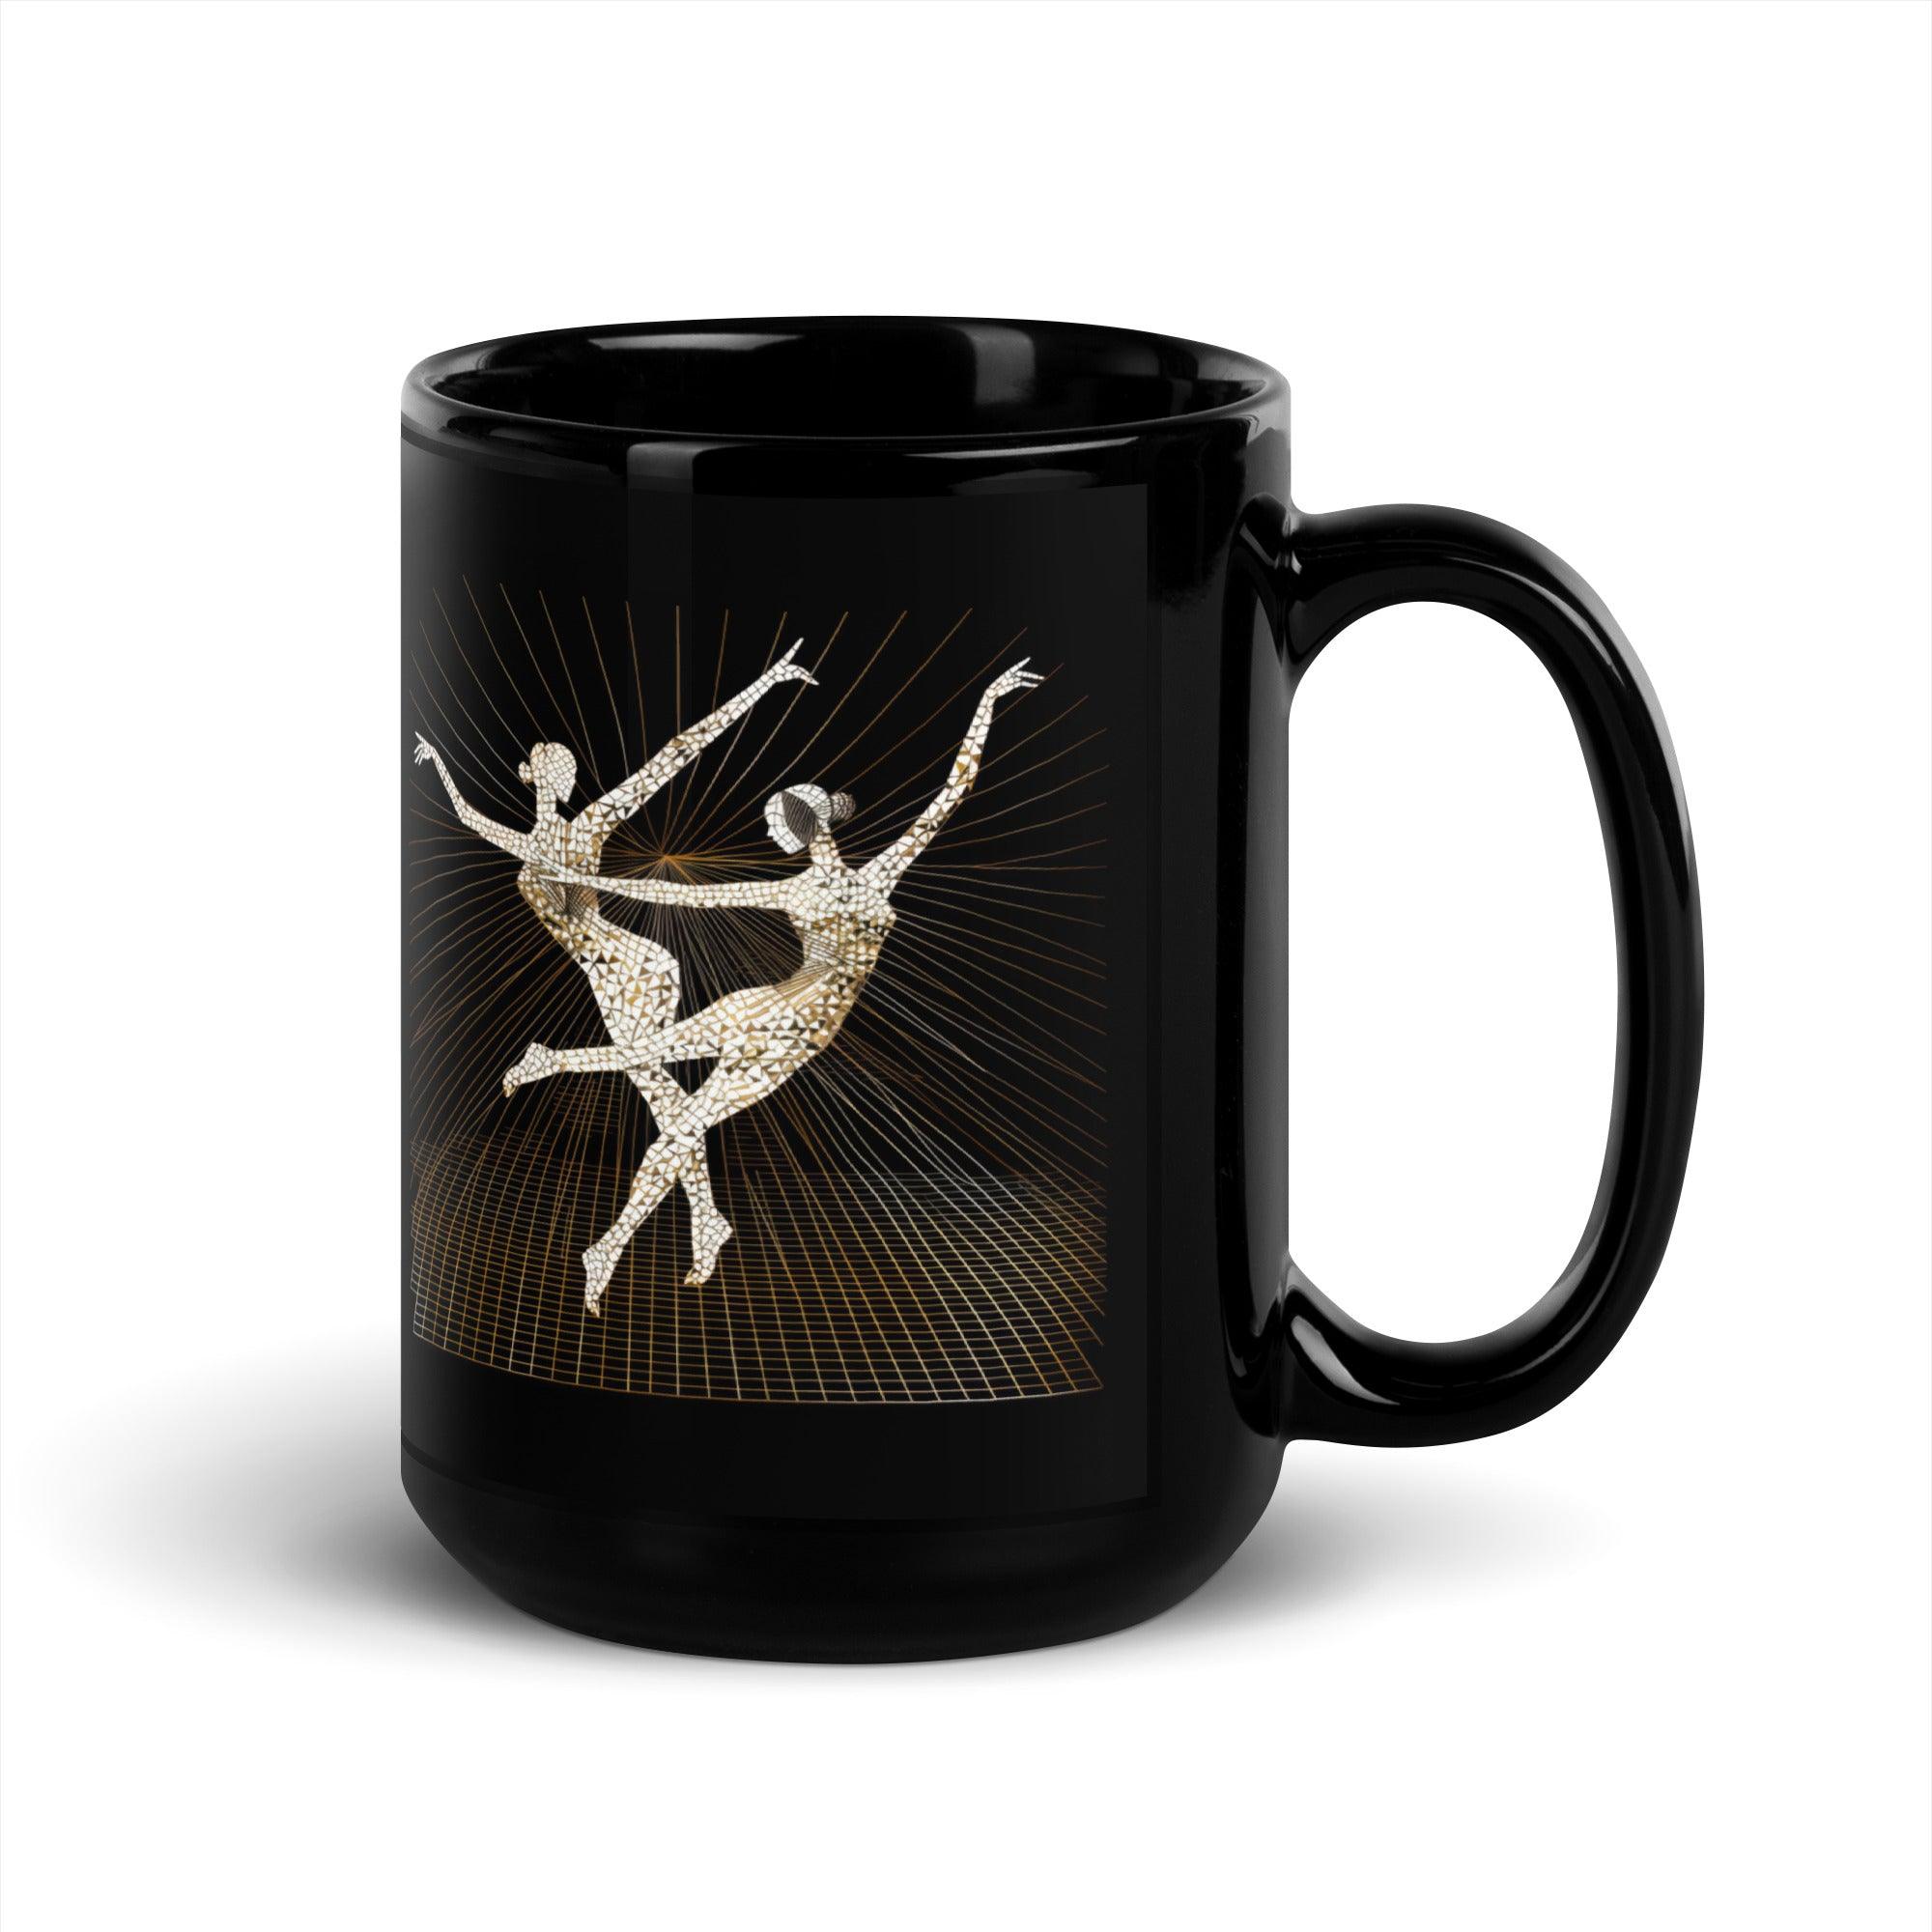 Artistic black mug showcasing elegant dance motion for coffee lovers